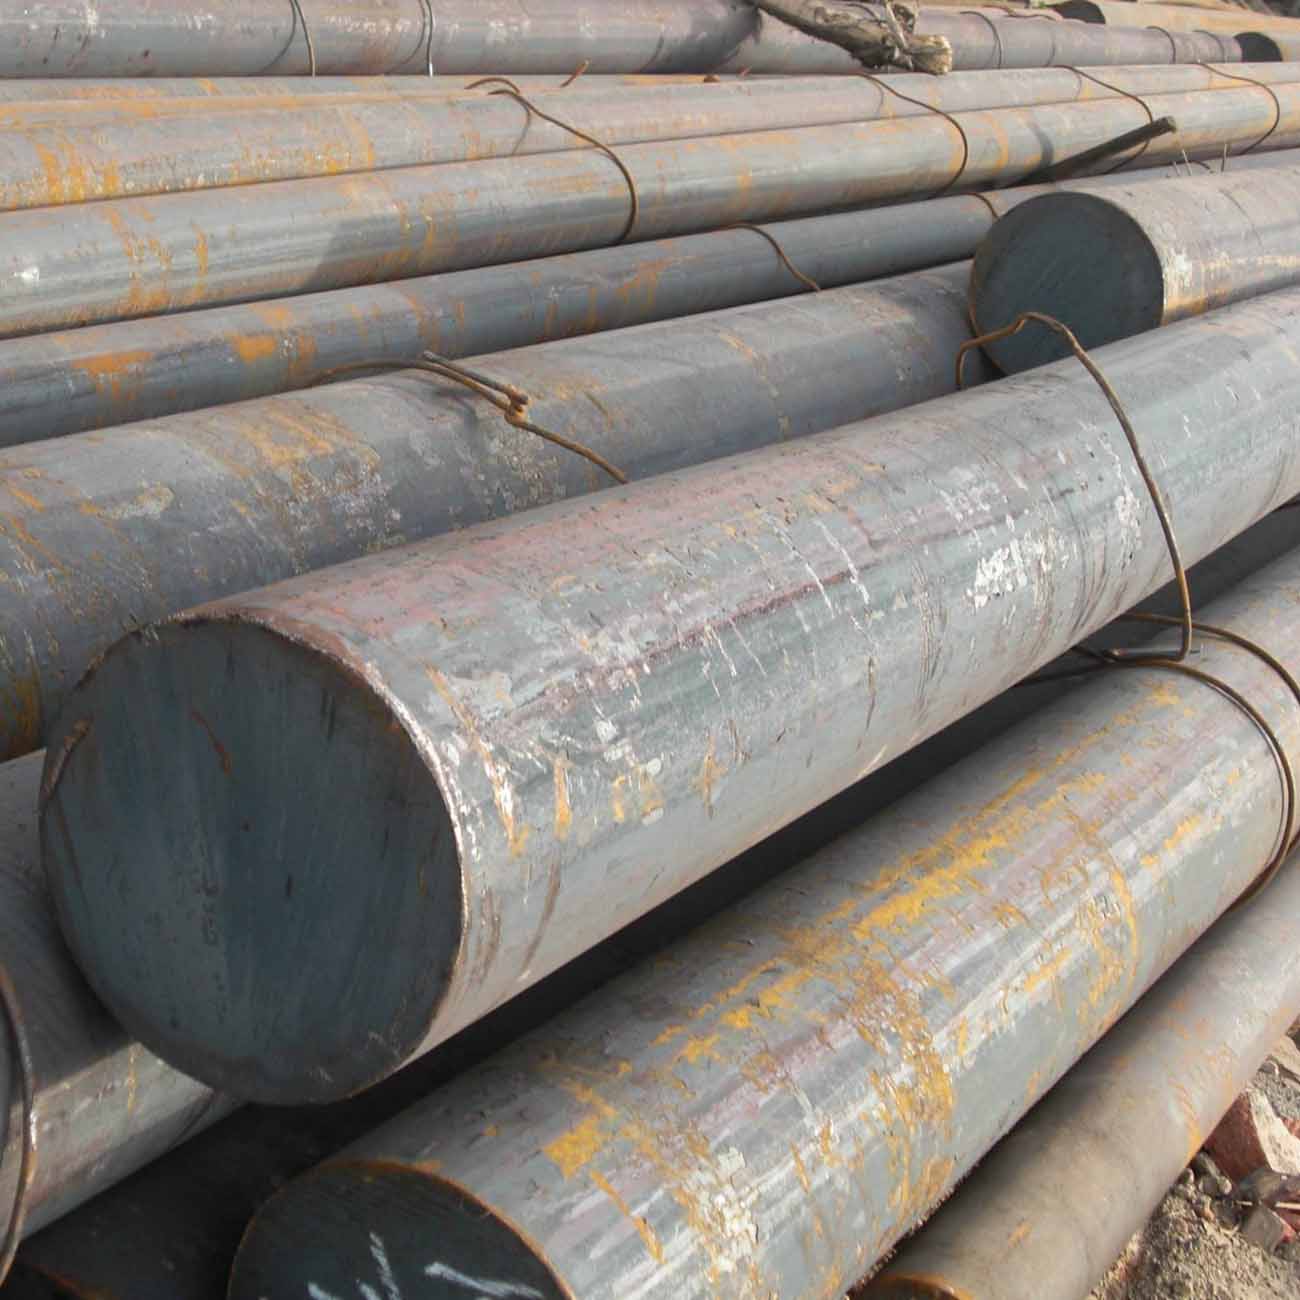 EN26 Alloy Steel Round Bars Suppliers in Mumbai India